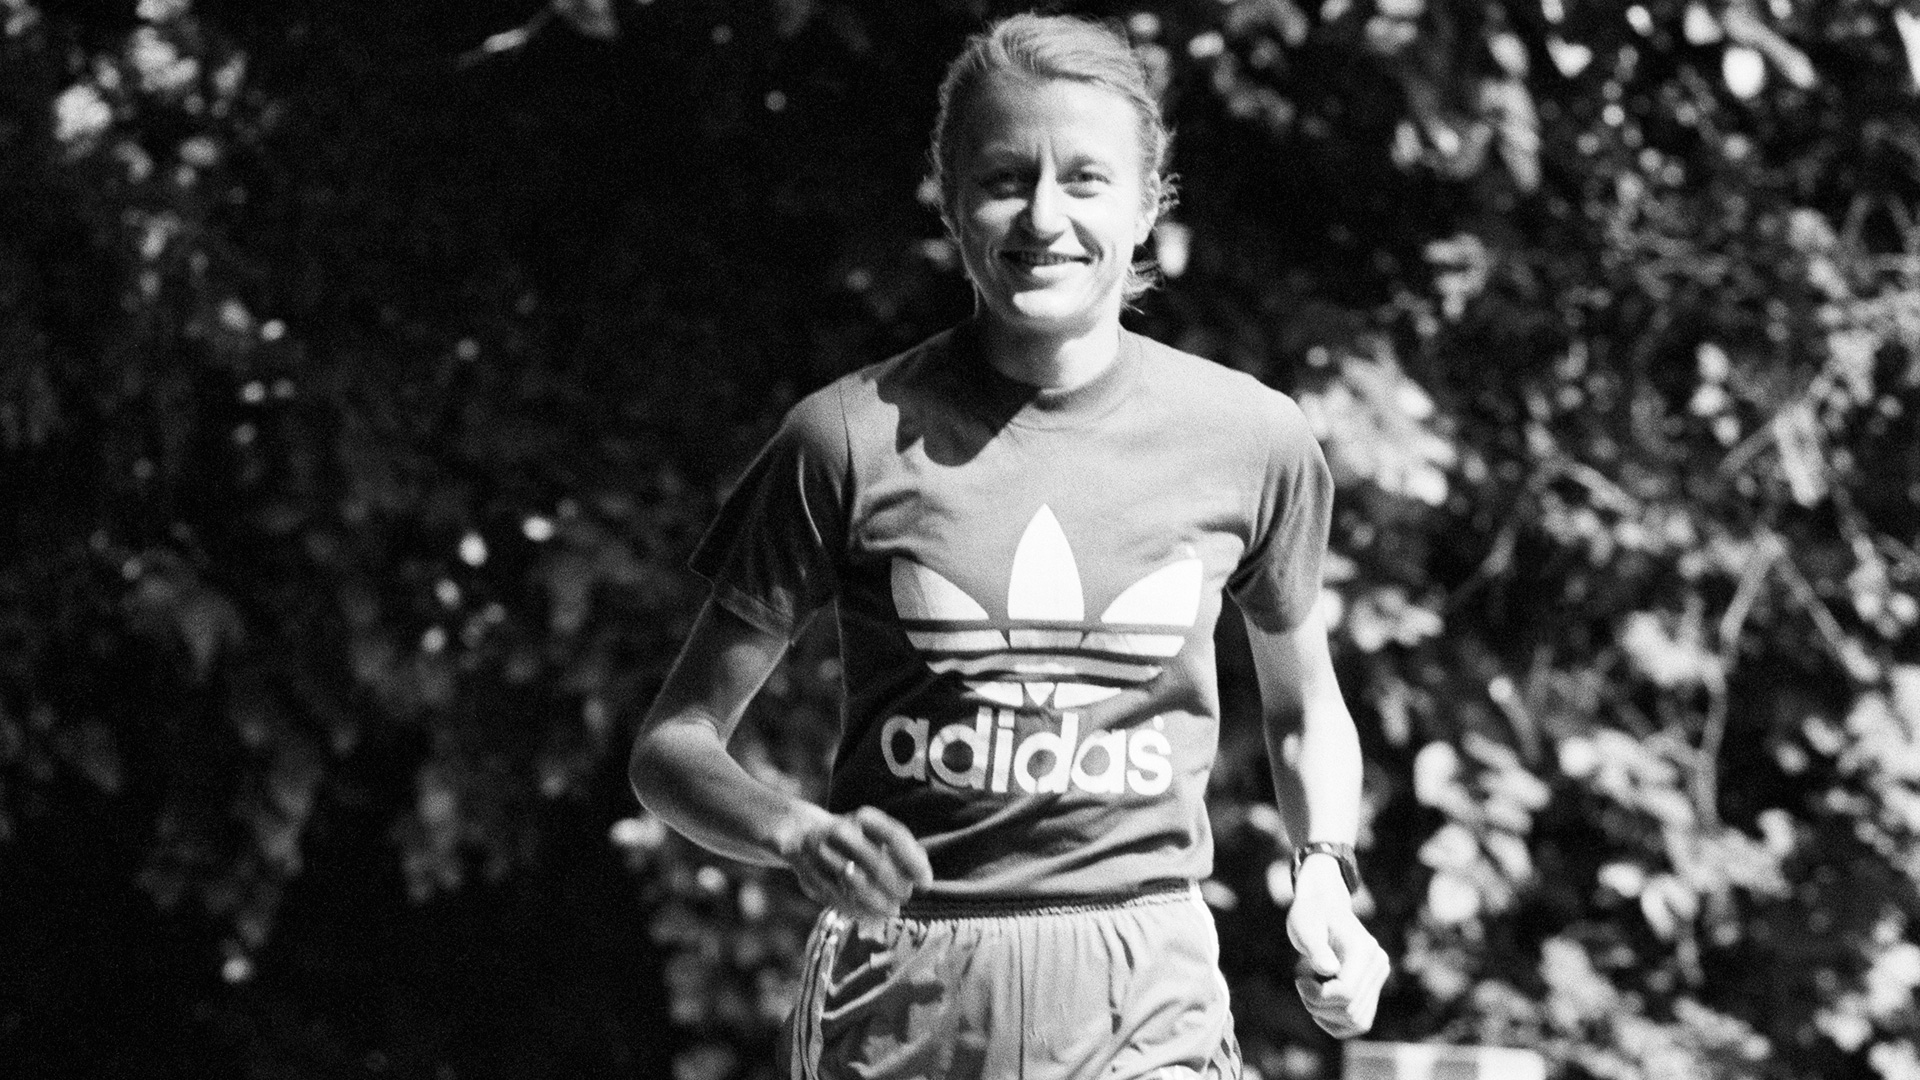 October 22, 1978: Grete Waitz Ran the Female World Record Marathon